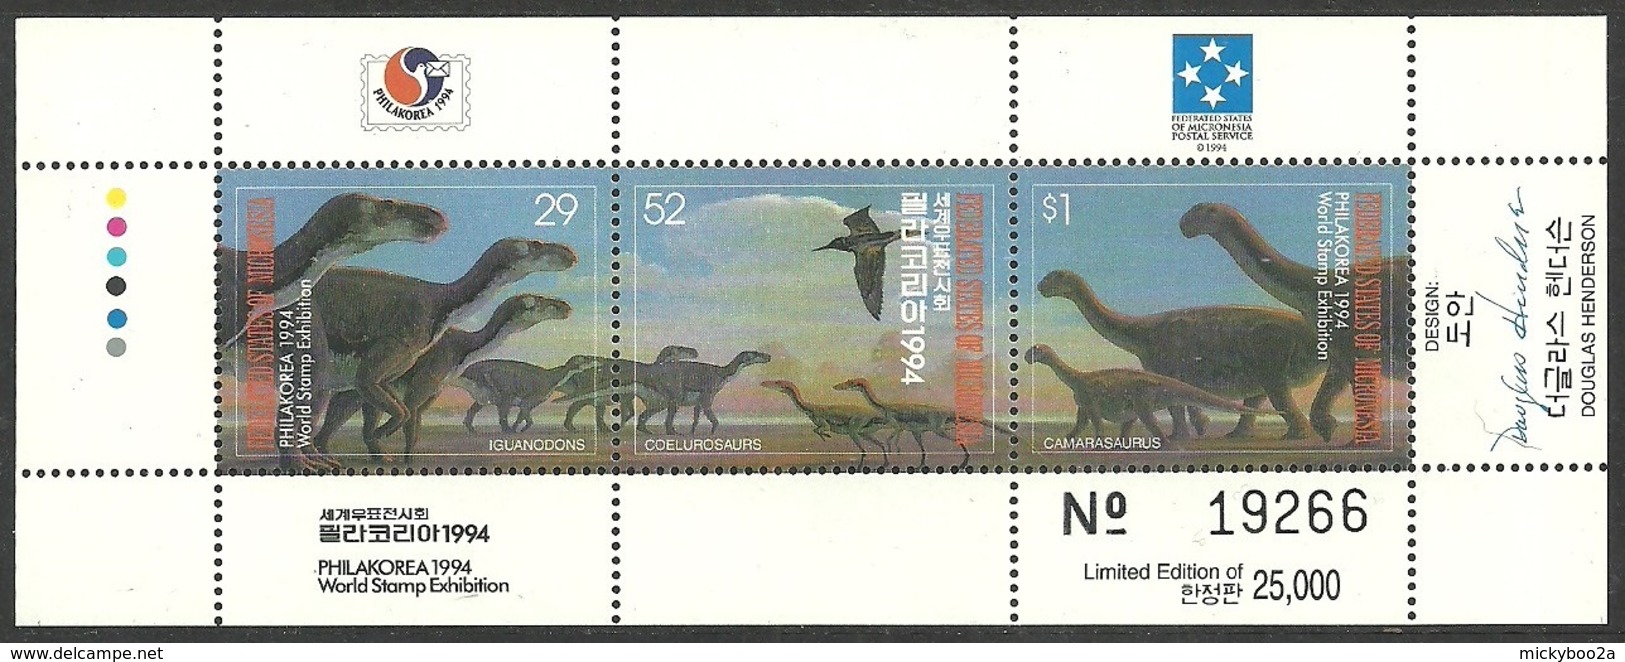 MICRONESIA 1994 PHILAKOREA STAMP EXHIBITION PREHISTORIC DINOSAURS BIRDS M/SHEET MNH - Micronesia